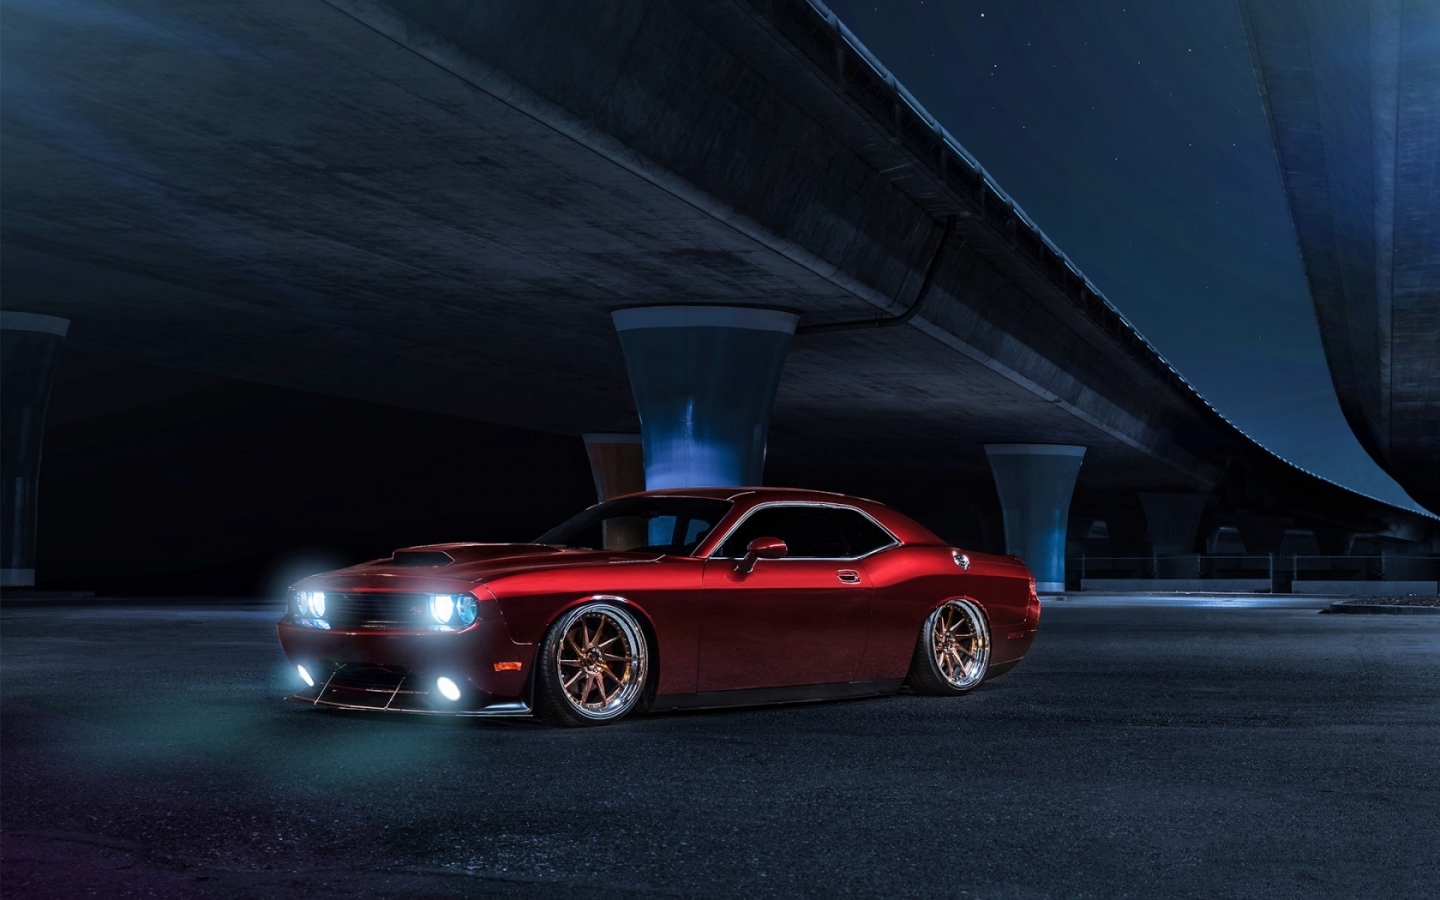 Red Dodge Challenger Avant Garde for 1440 x 900 widescreen resolution